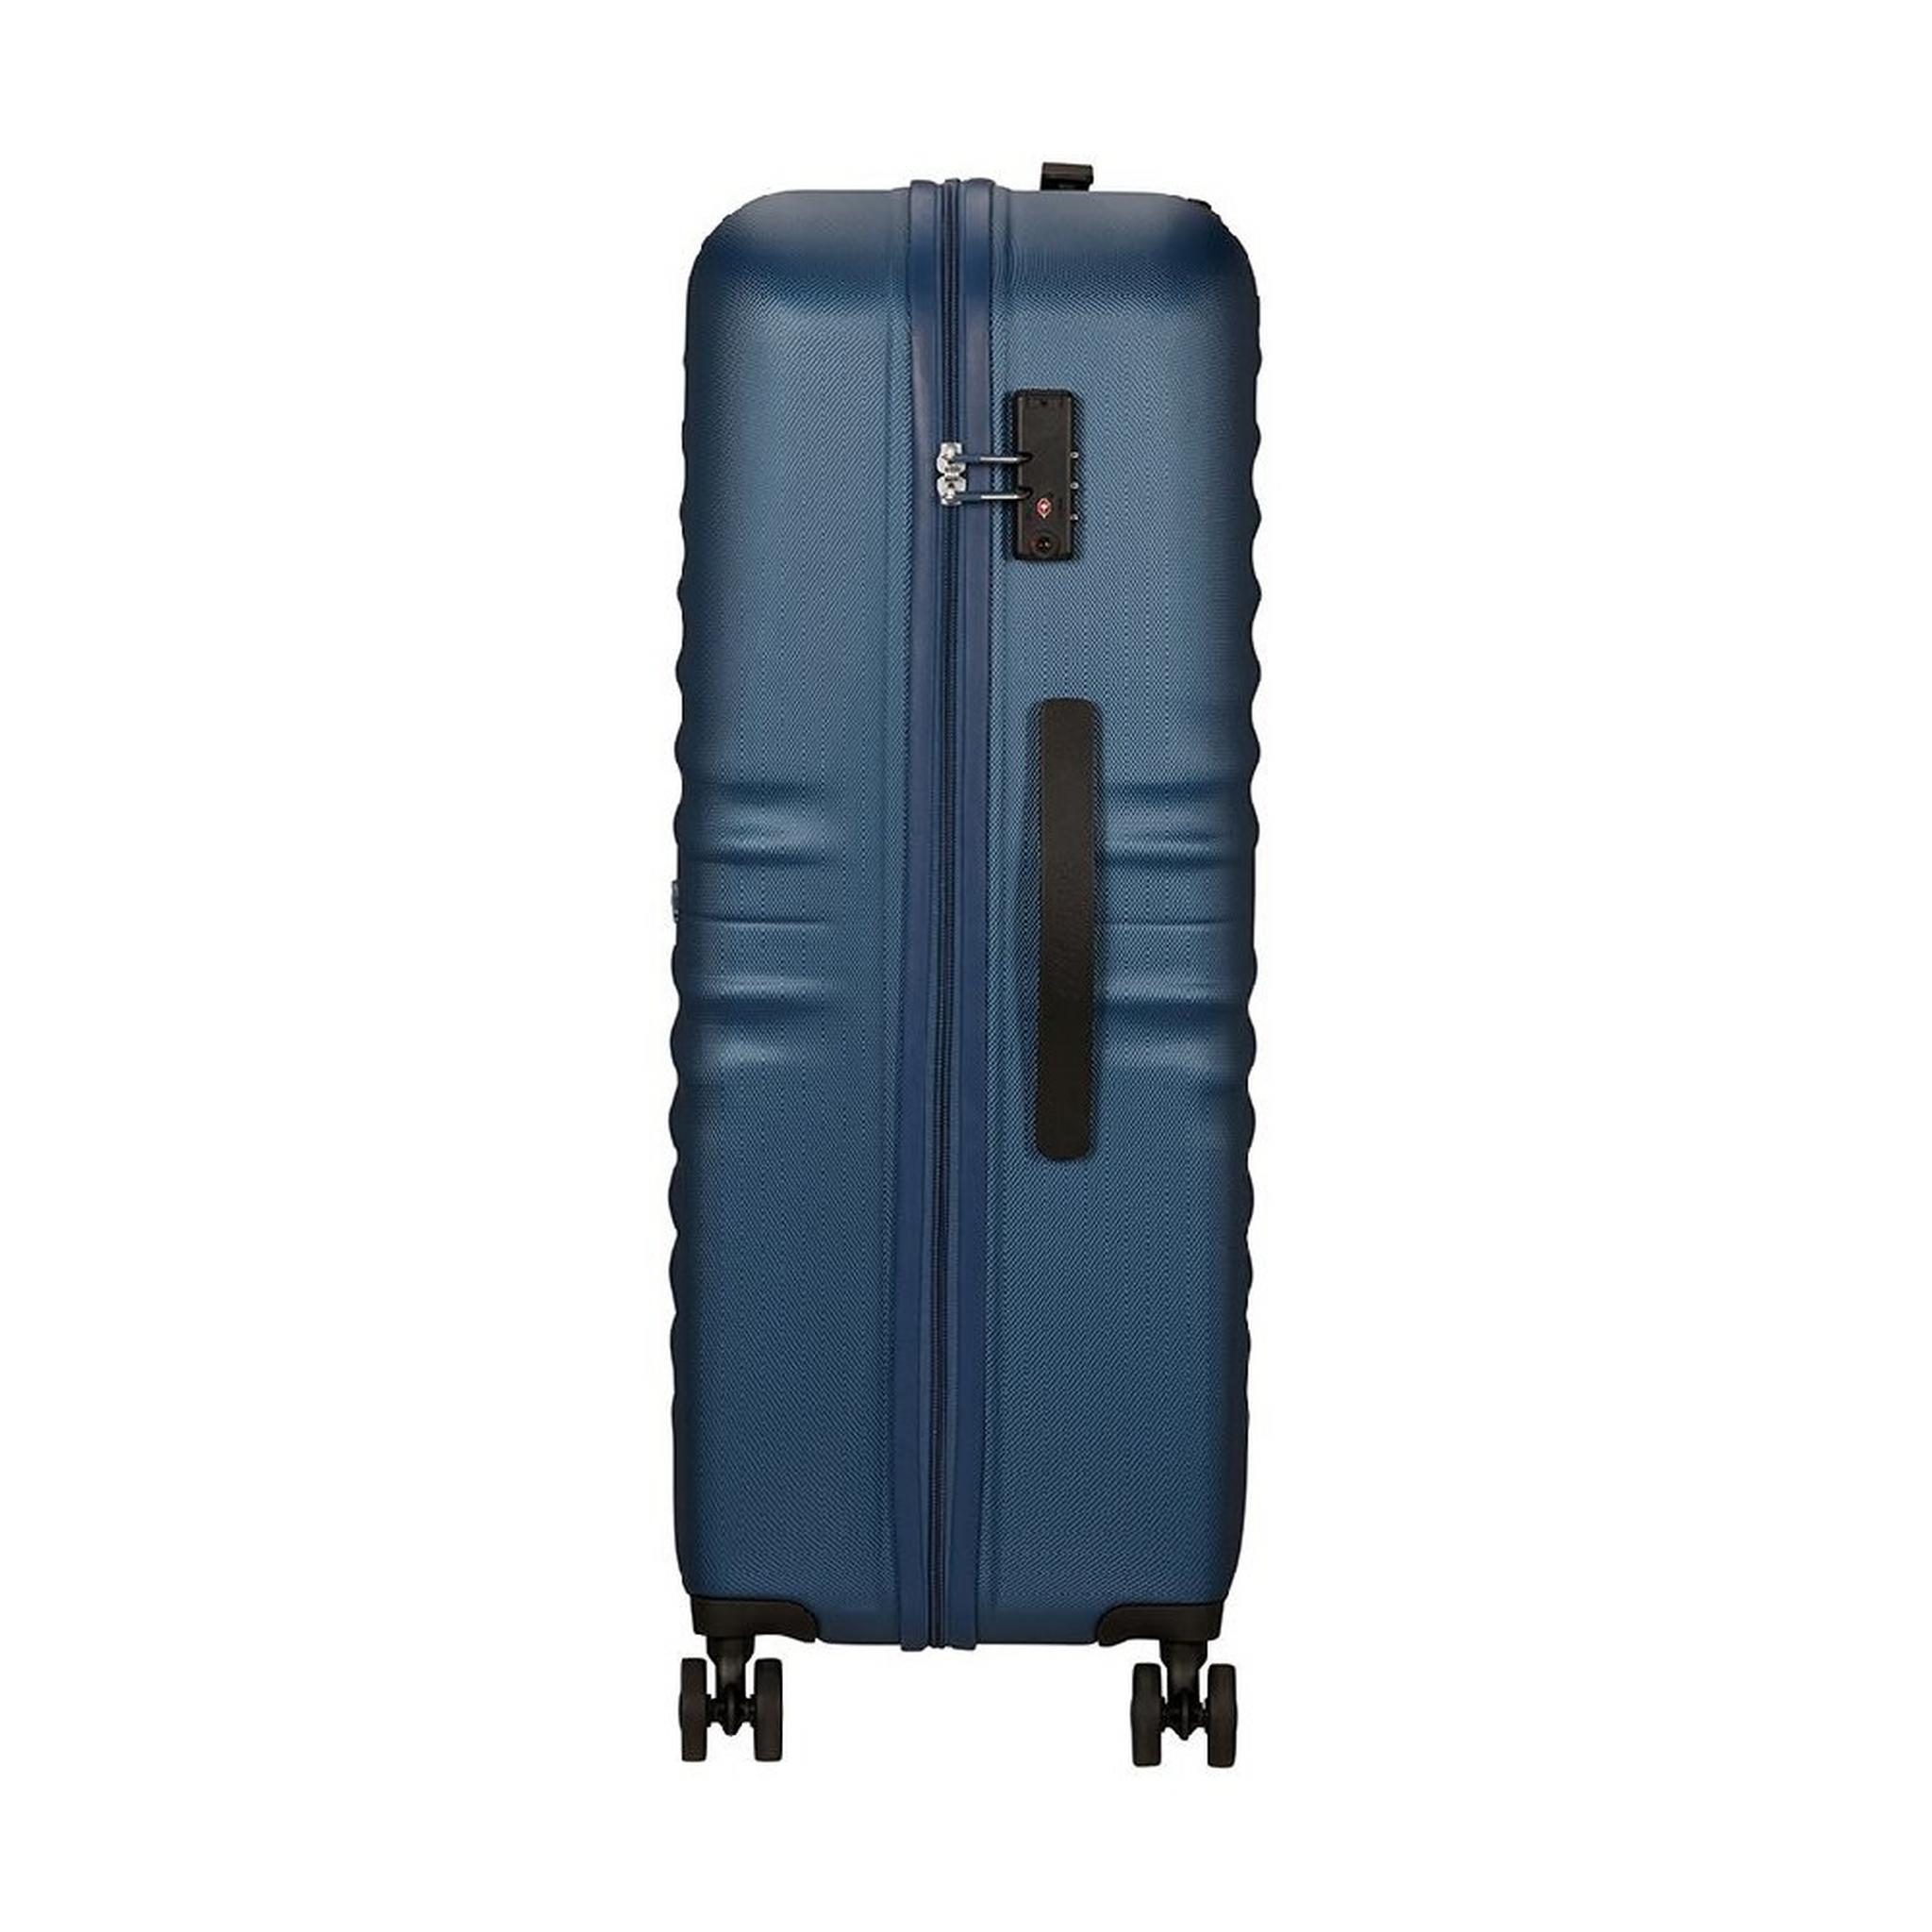 حقيبة سفر تويست ويفز بجوانب صلبة وعجلات دوارة 88سم، QC6X41009 - كحلي غامق